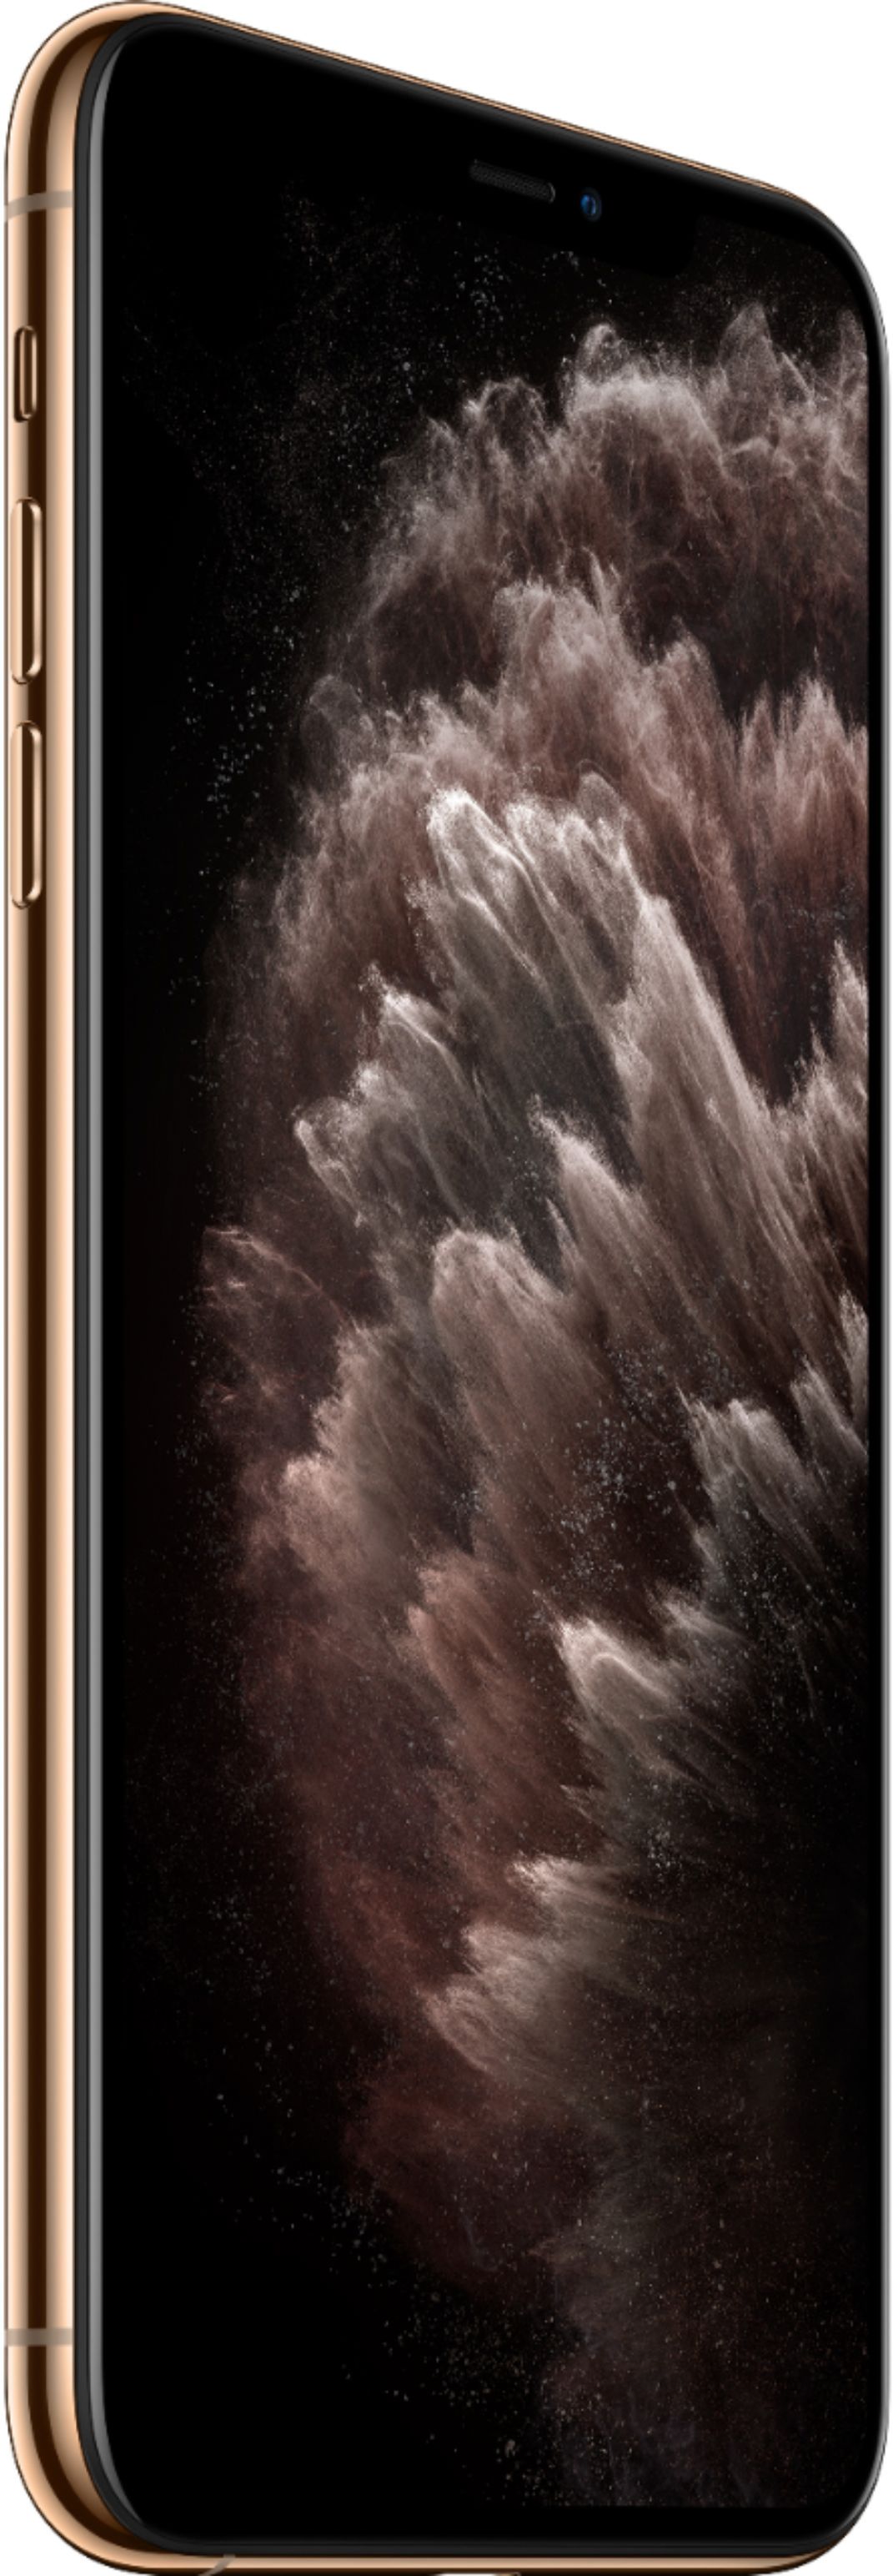 Best Buy: Apple iPhone 11 Pro Max 256GB Gold (Unlocked) MWGM2LL/A